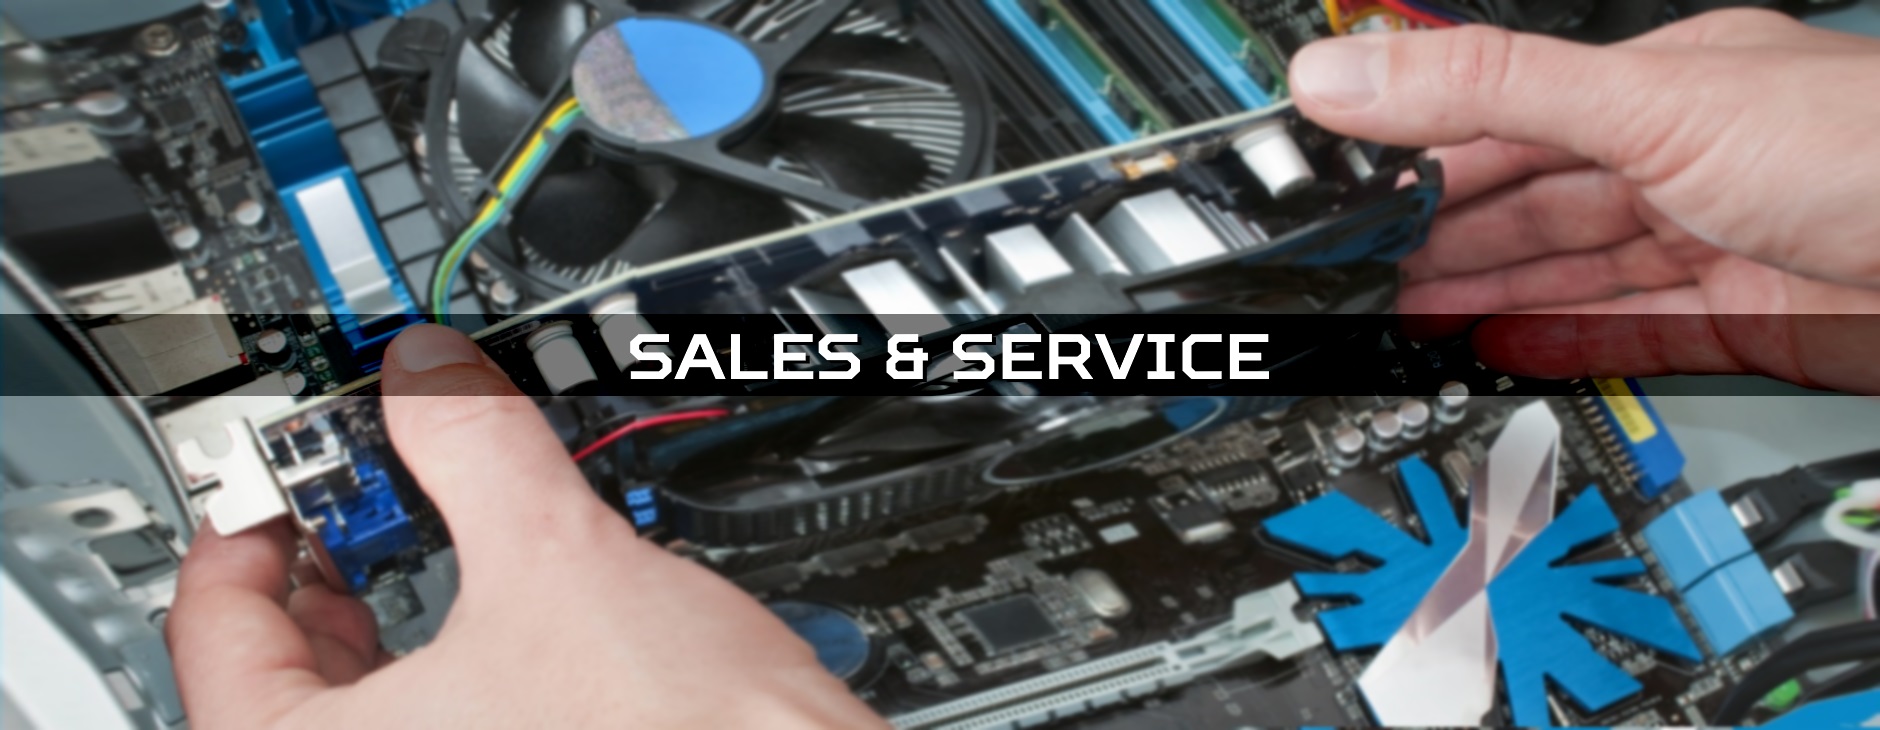 Sales-Service-3.jpg